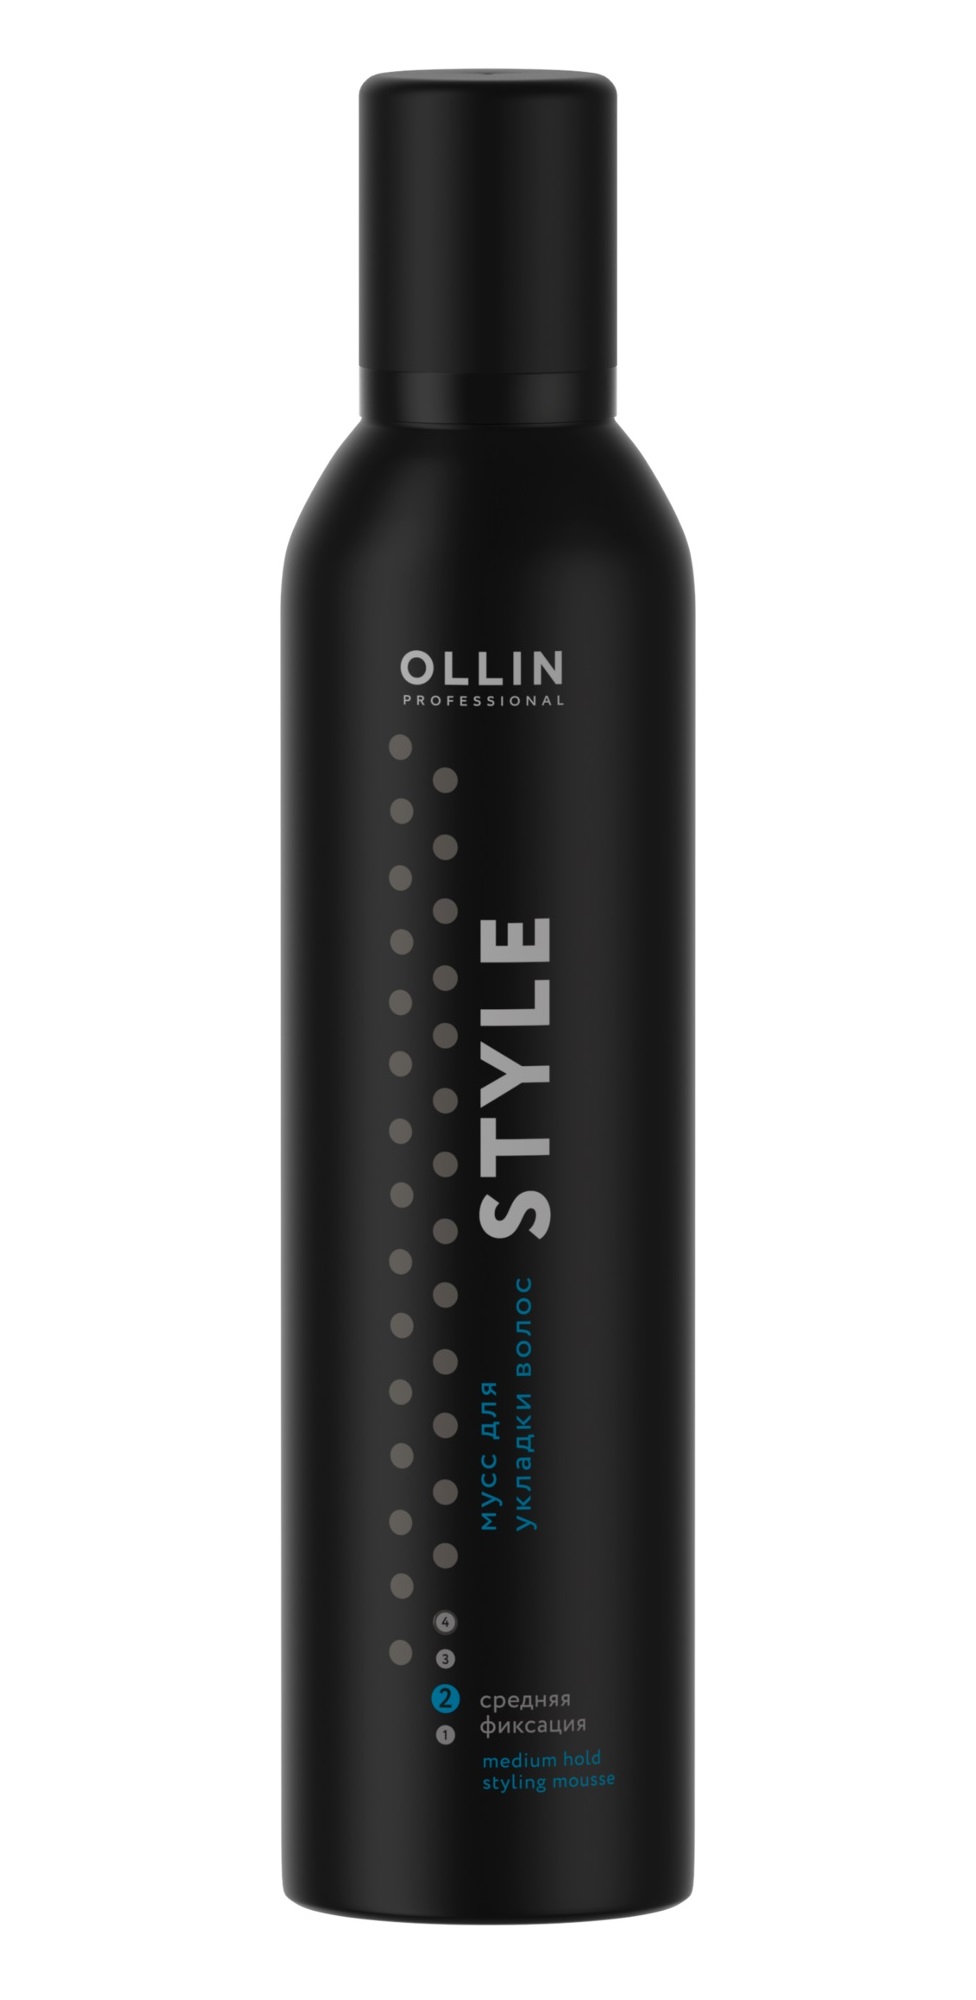 Ollin Professional Мусс для укладки волос средней фиксации, 250 мл (Ollin Professional, Style) ollin professional лосьон спрей для укладки волос средней фиксации 250 мл ollin professional style